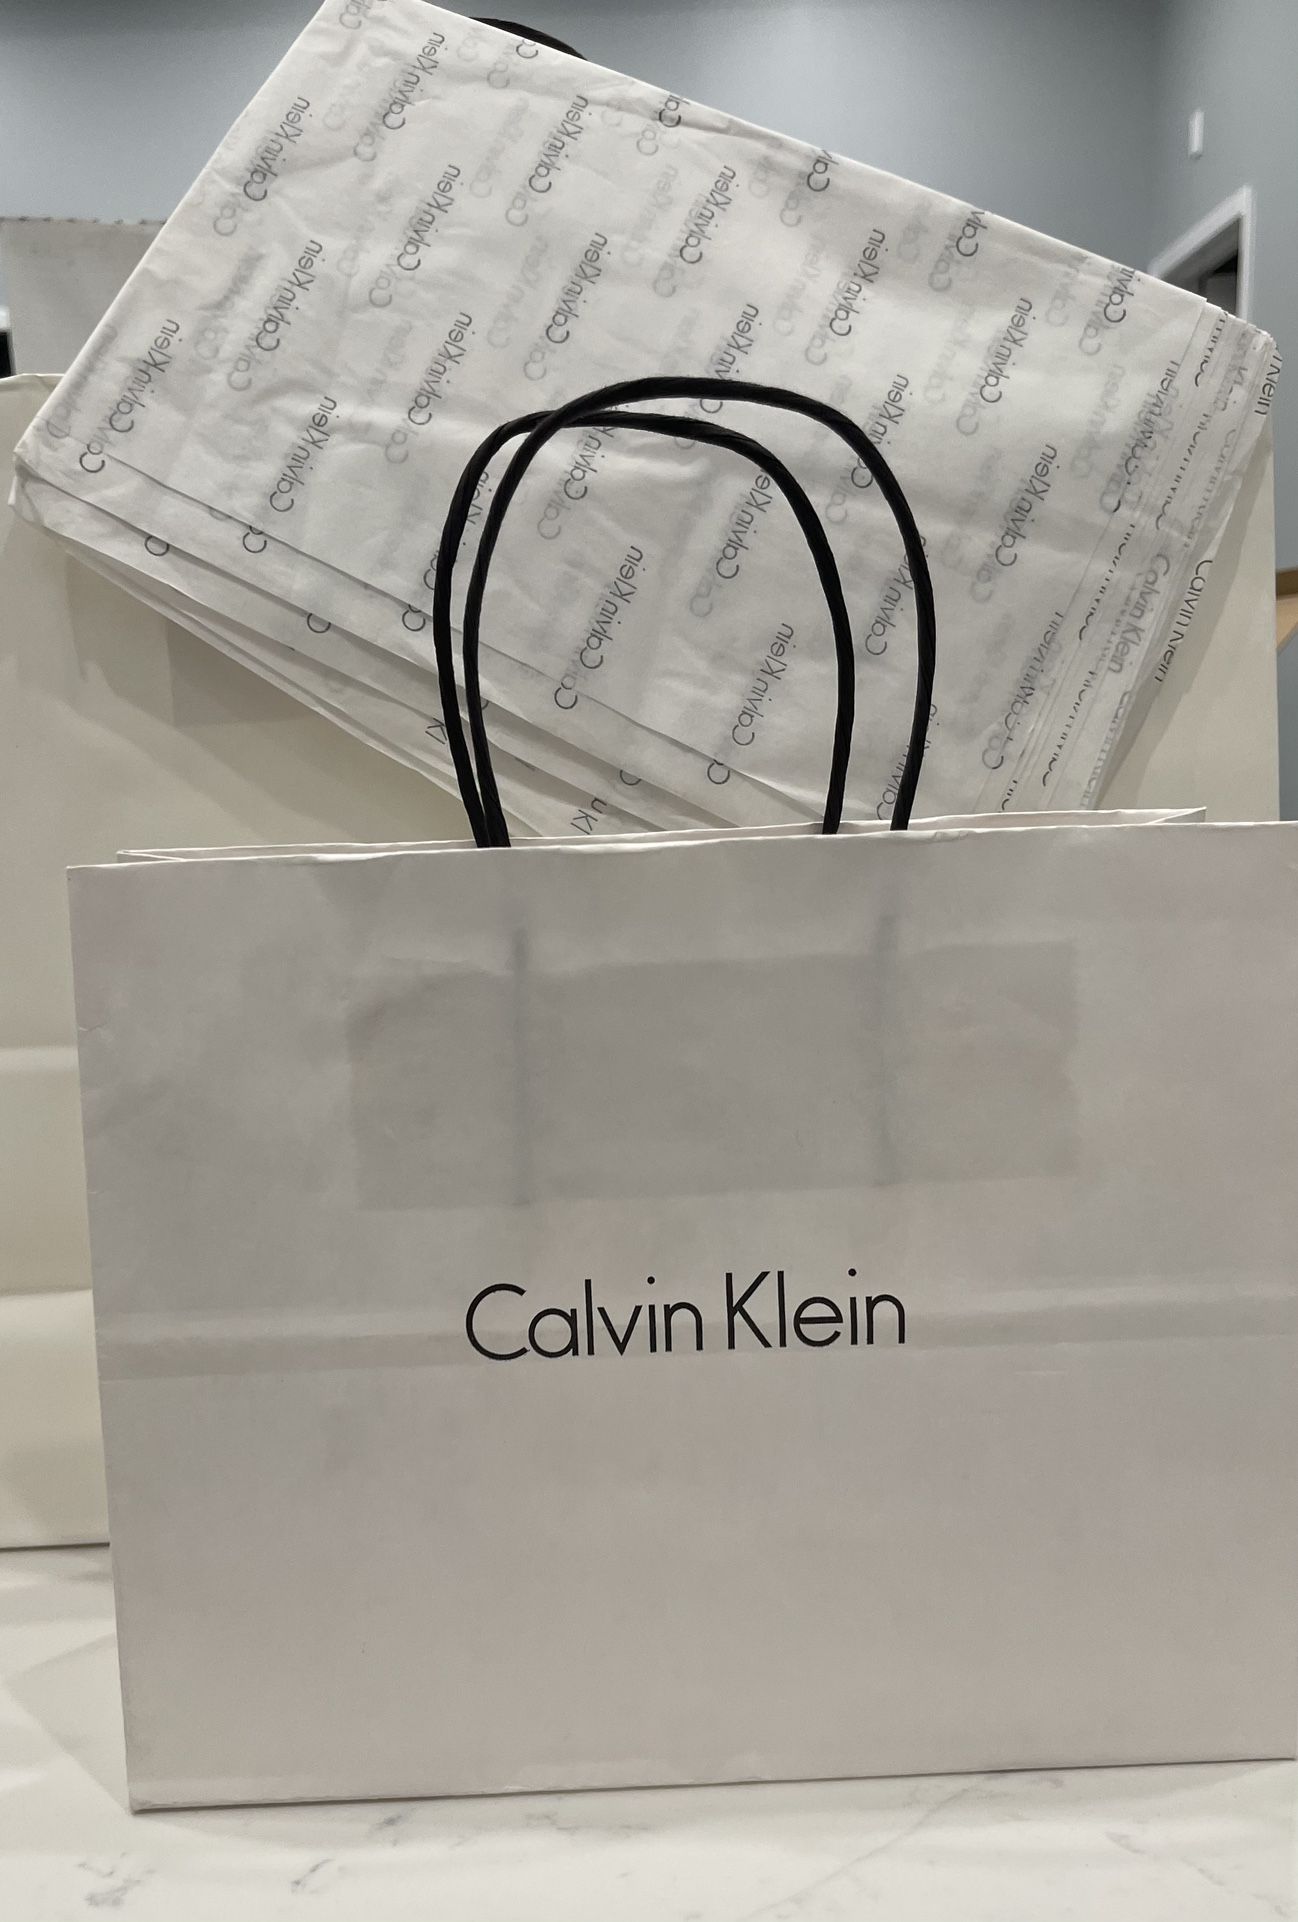 CALVIN KLEIN (CK) MEDIUM & SMALL PAPER GIFT BAGS LOT OF 5